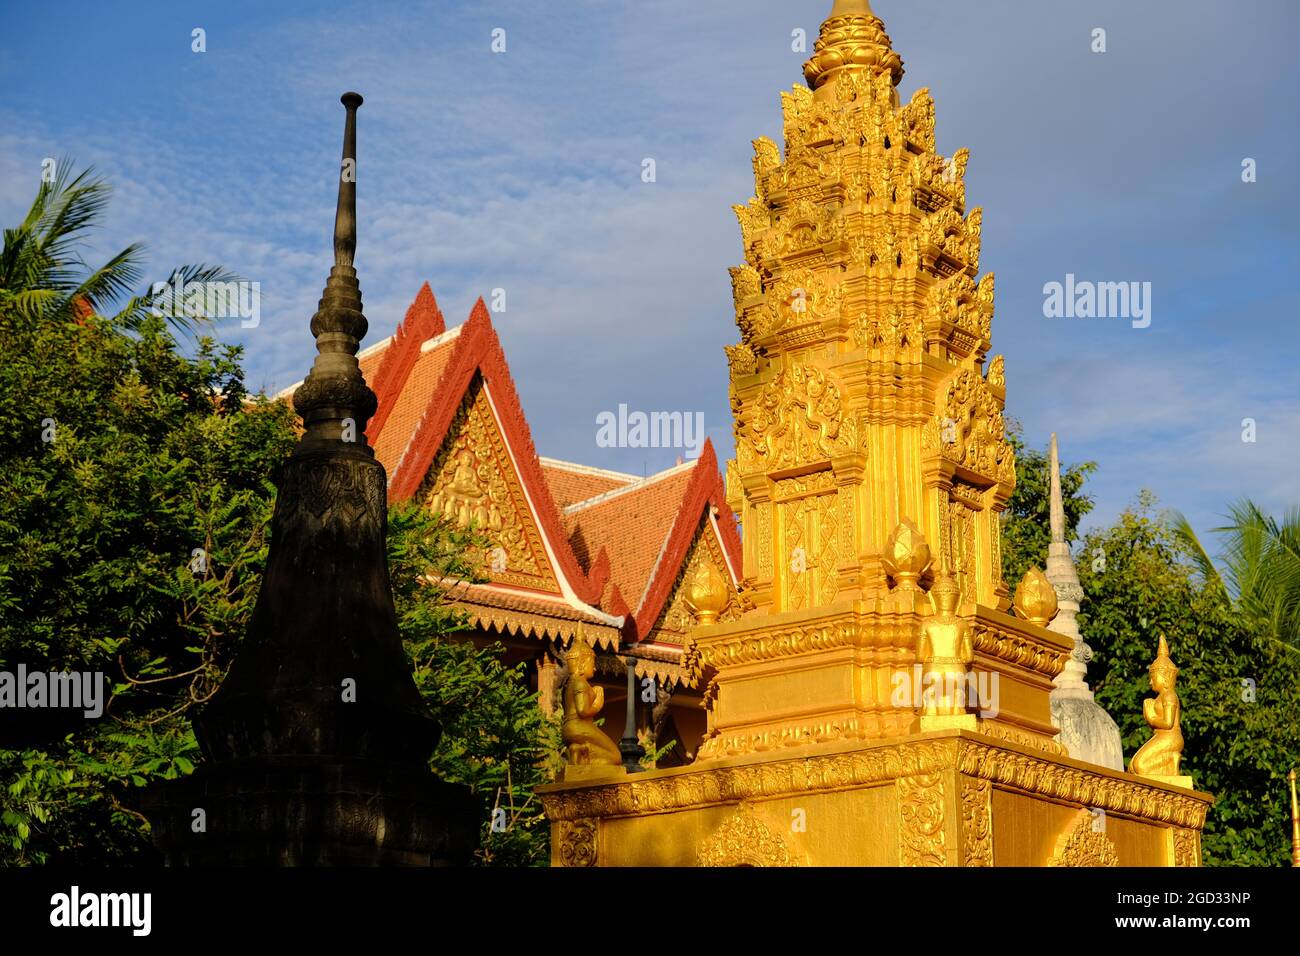 Cambodia Krong Siem Reap - Wat Damnak golden Chedi - golden Stupa tower Stock Photo